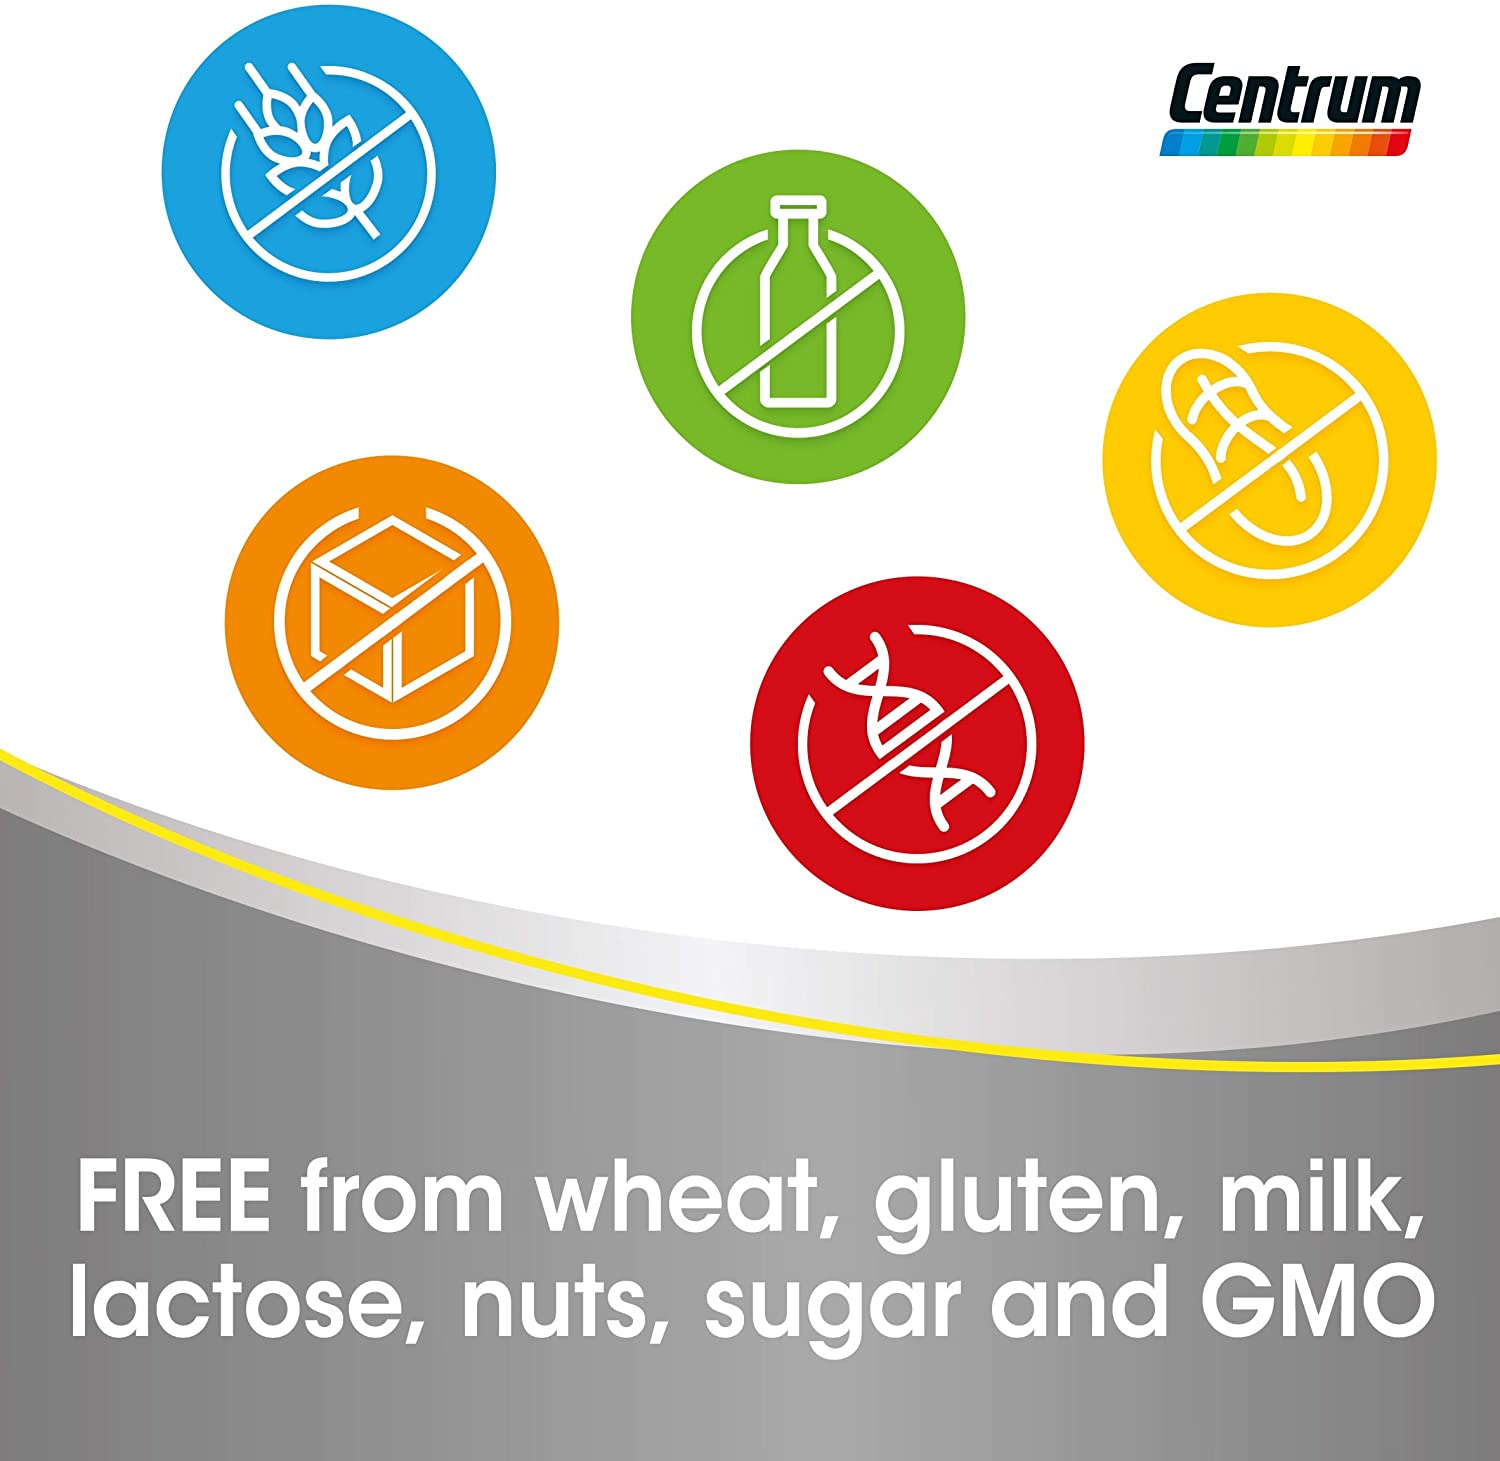 Centrum Advance | Multivitamin & Minerals | 24 Essential Nutrients Including Vitamin D, Complete Multivitamins | 1x 100 Tablets